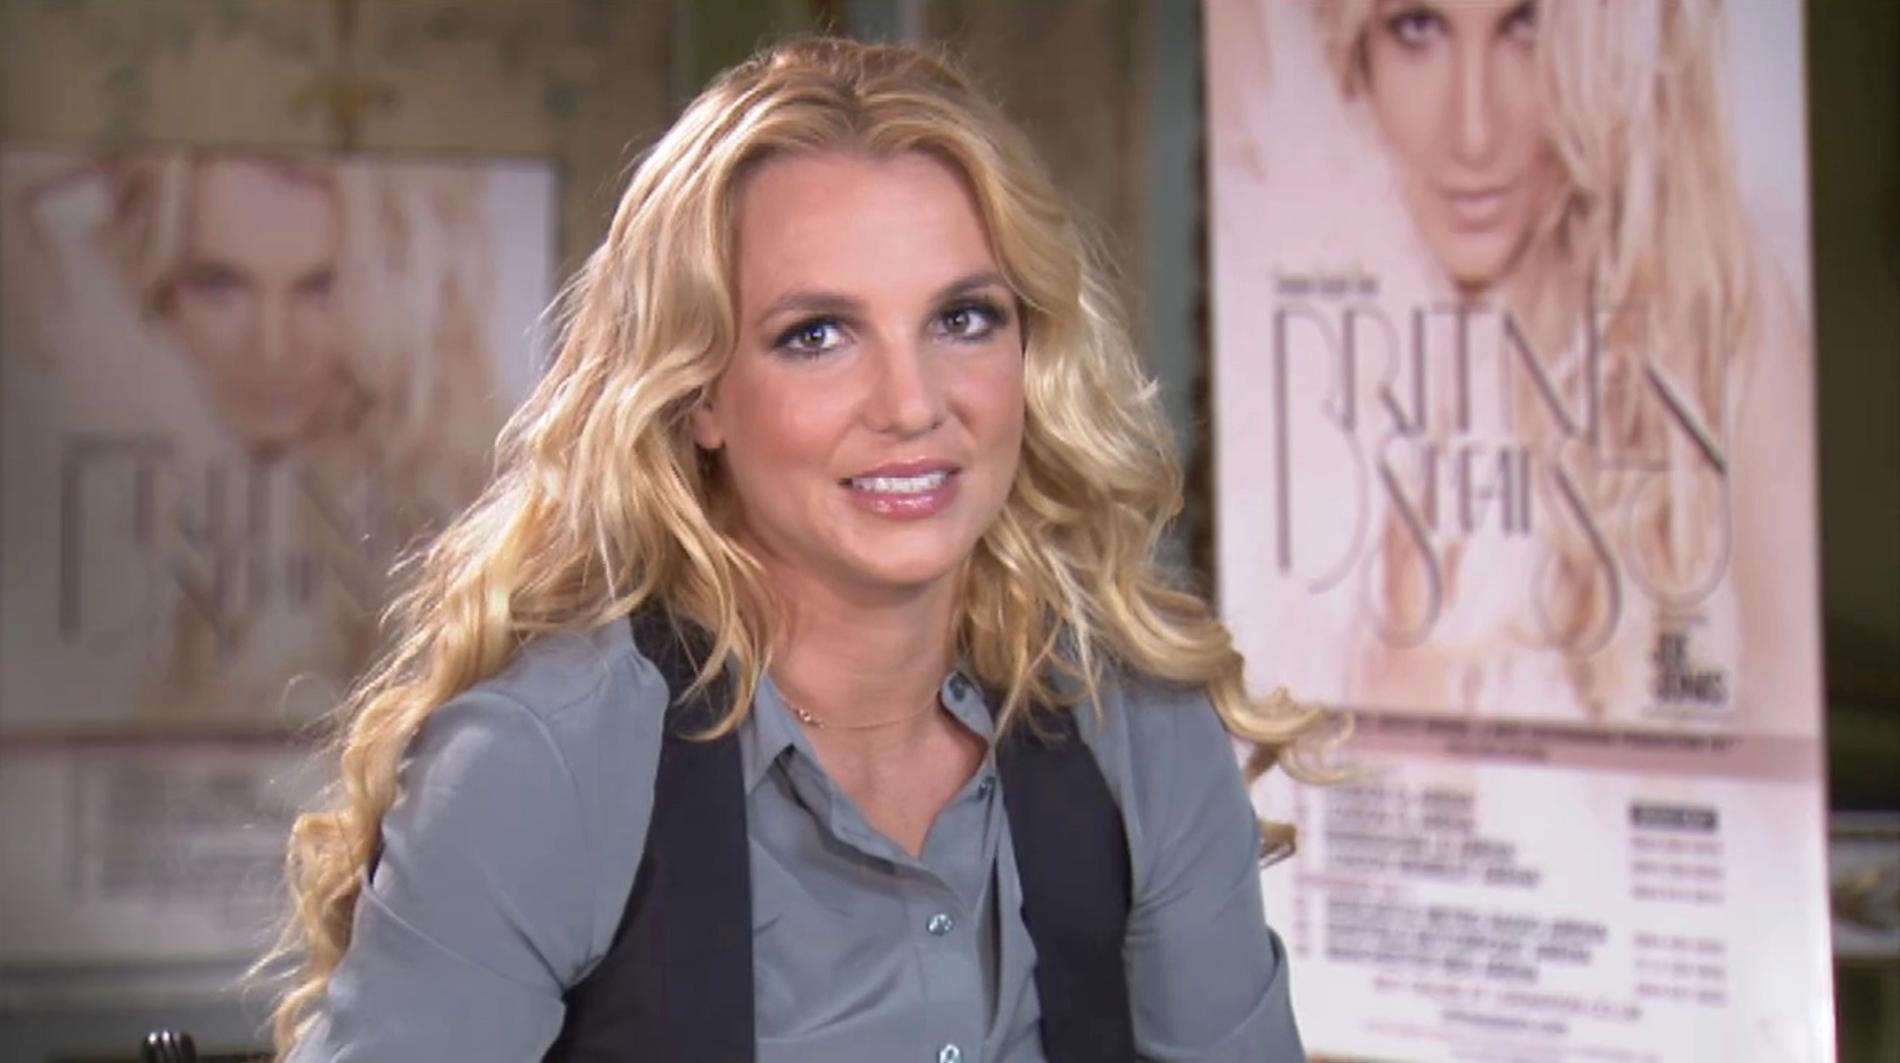 Britney Spears intervjuad av Aftonbladet 2011